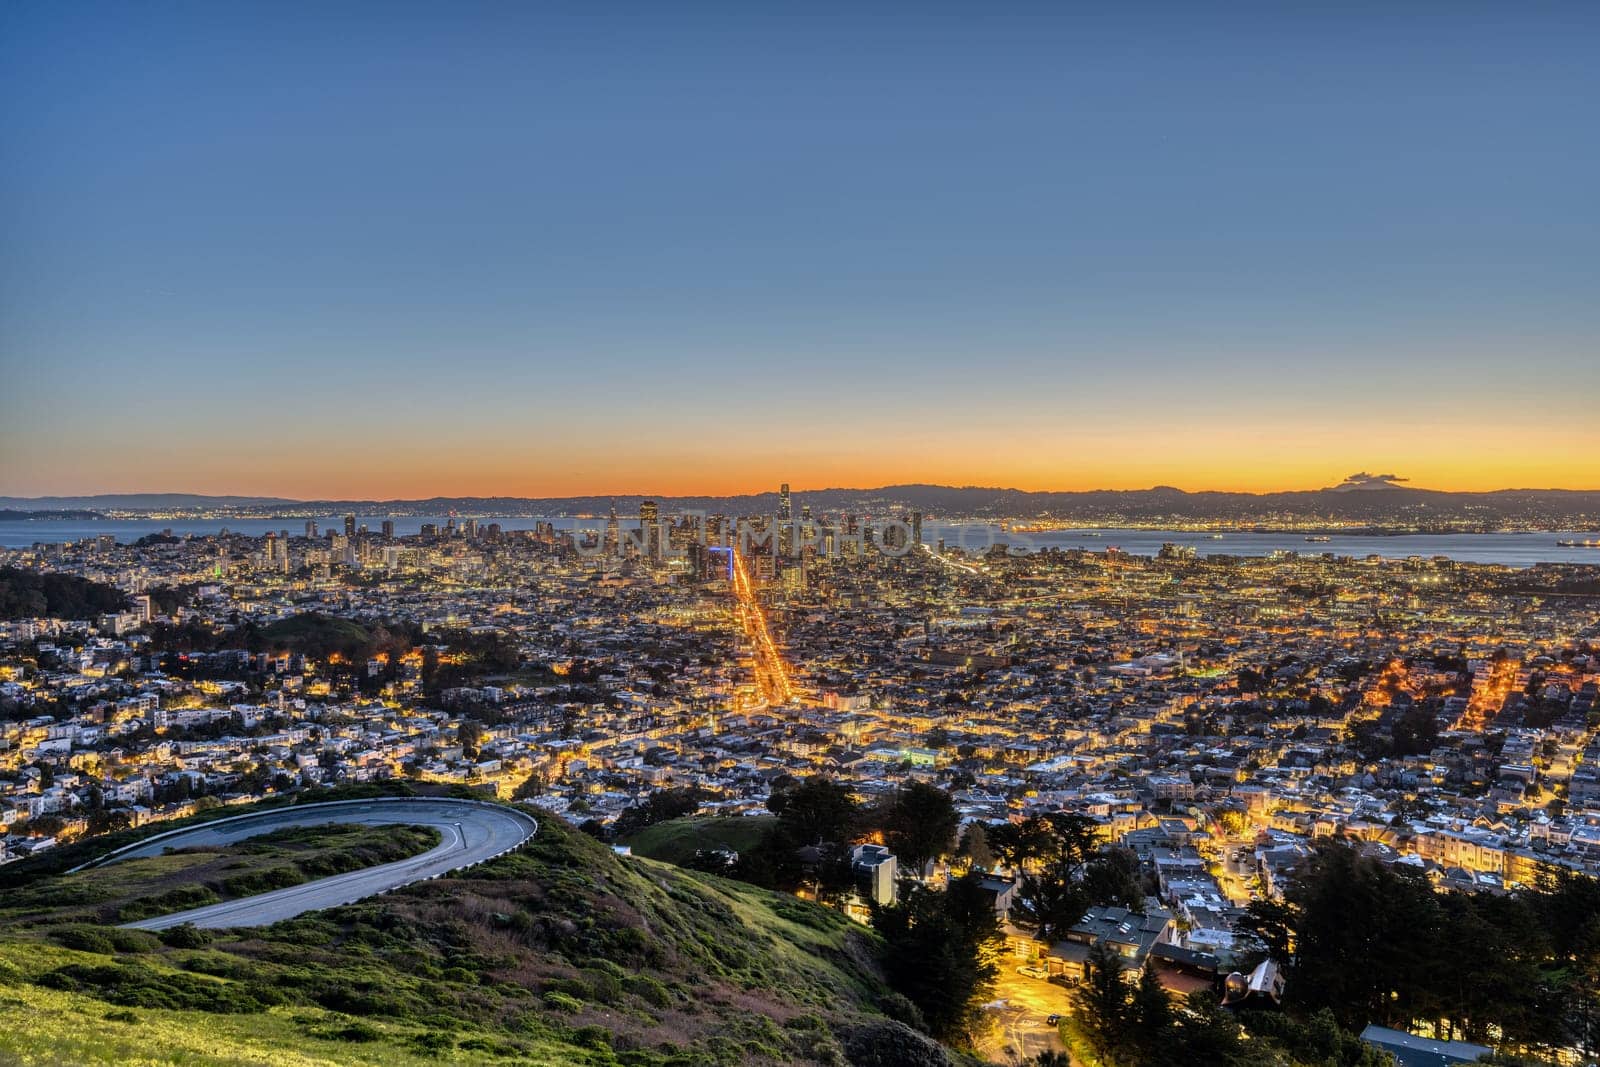 The skyline of San Francisco before sunrise by elxeneize